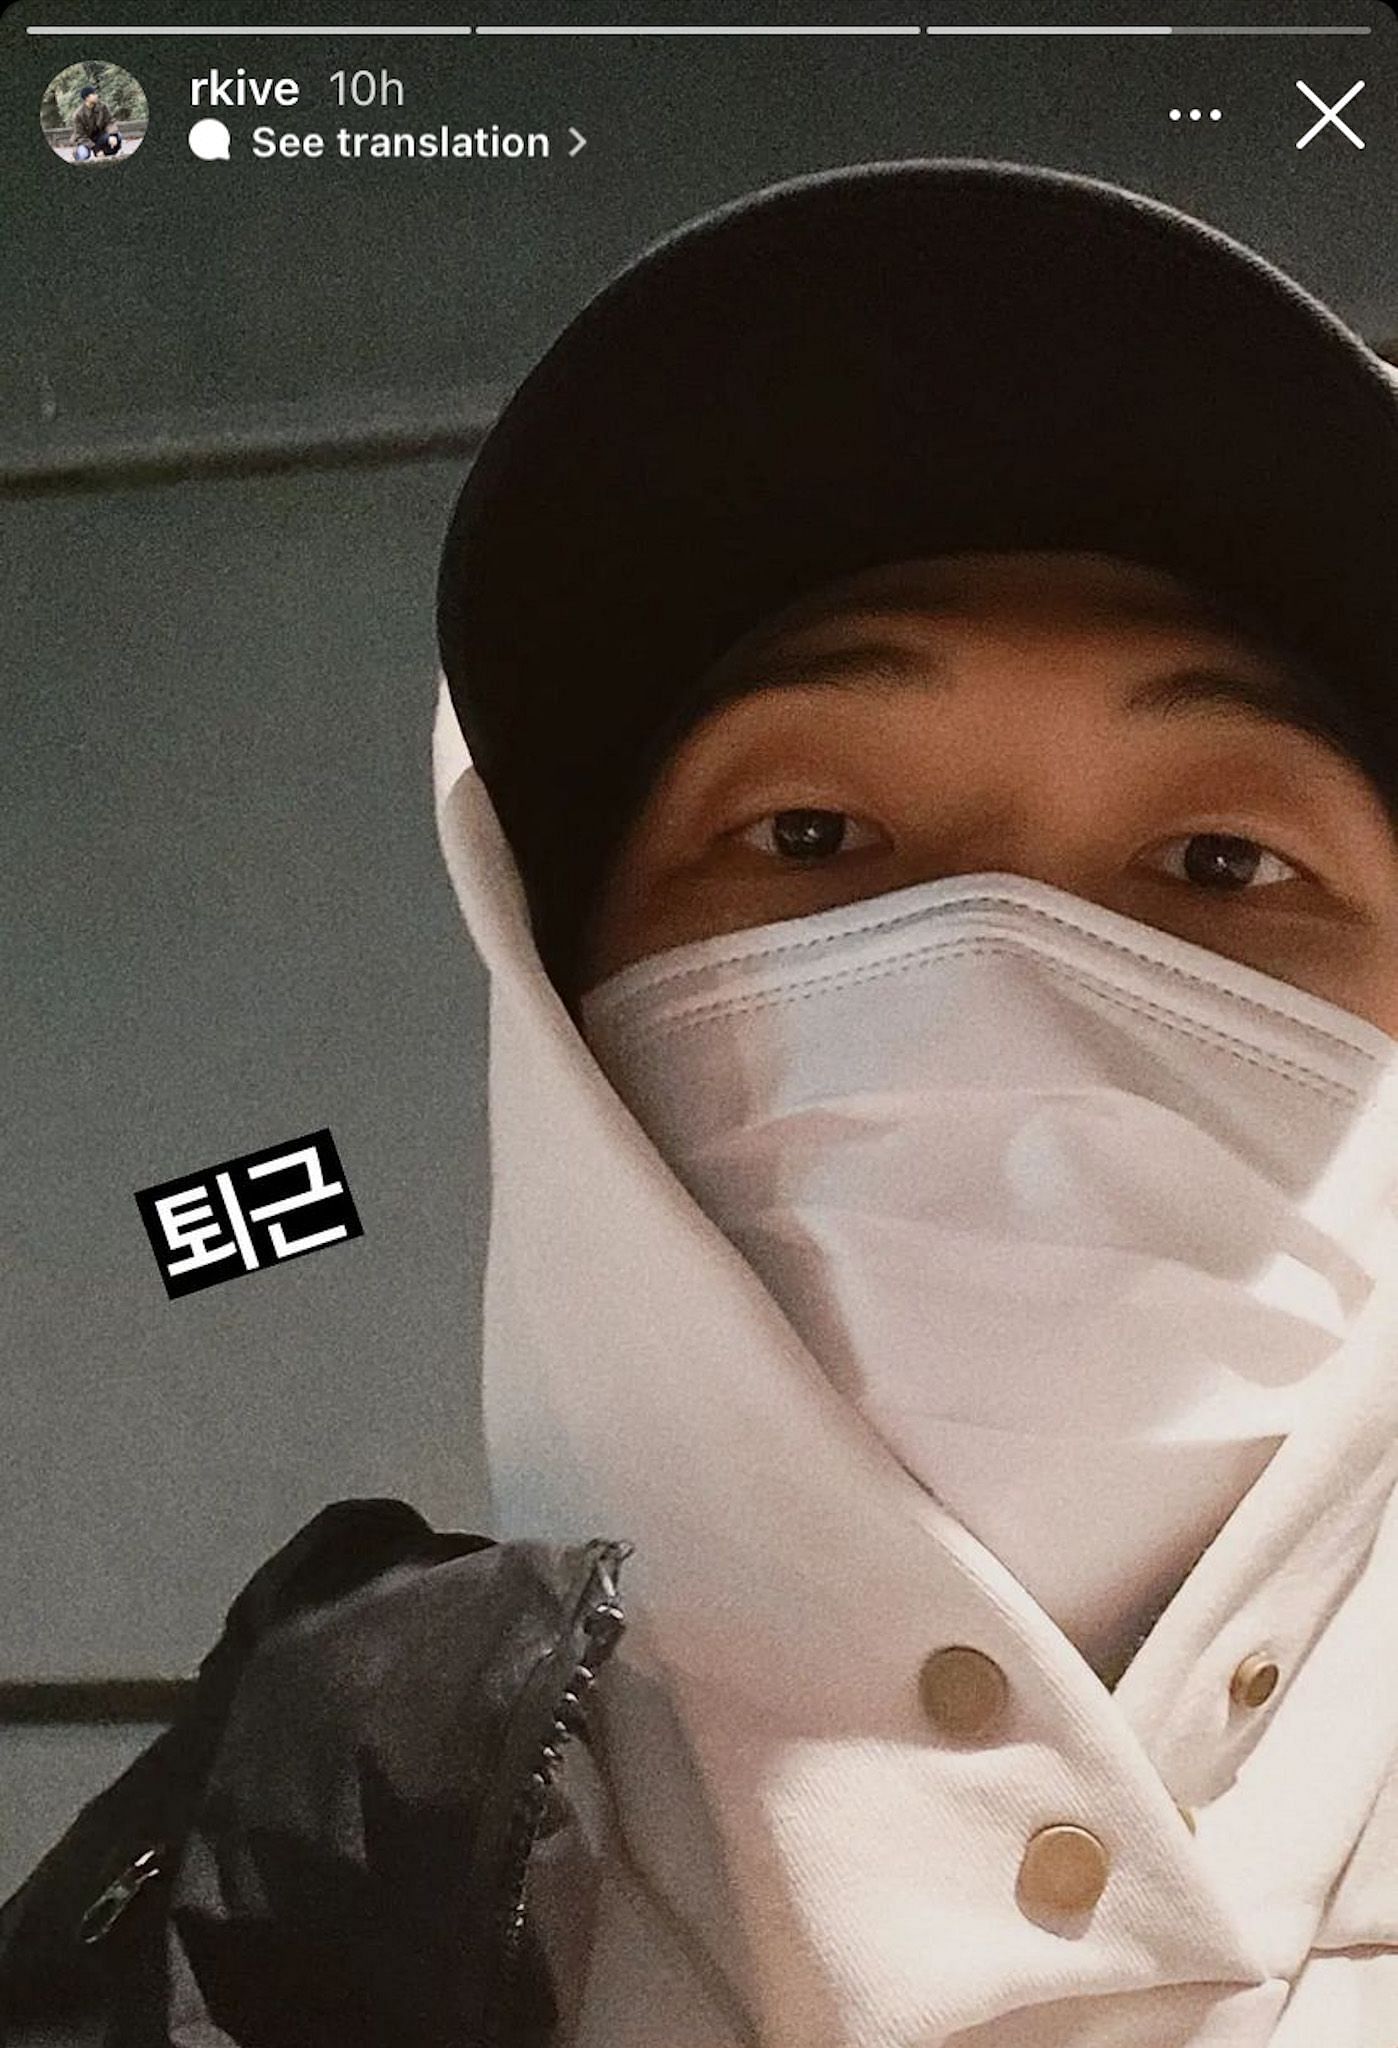 RM posts a selca of himself after work (Image via Instagram/@rkive)